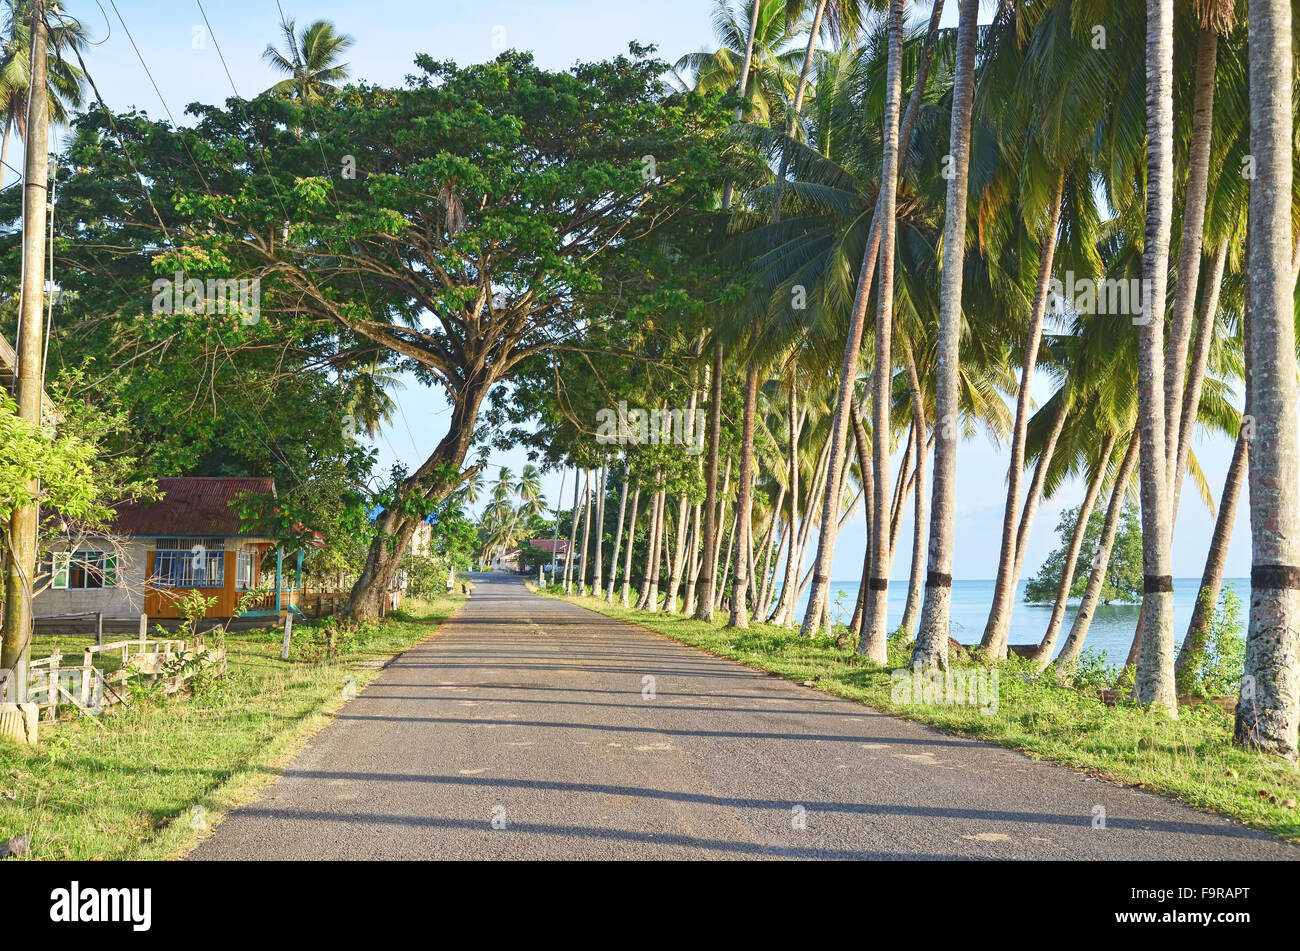 A street by the beach situation in Biduk-Biduk village, Berau, East Borneo Stock Photo